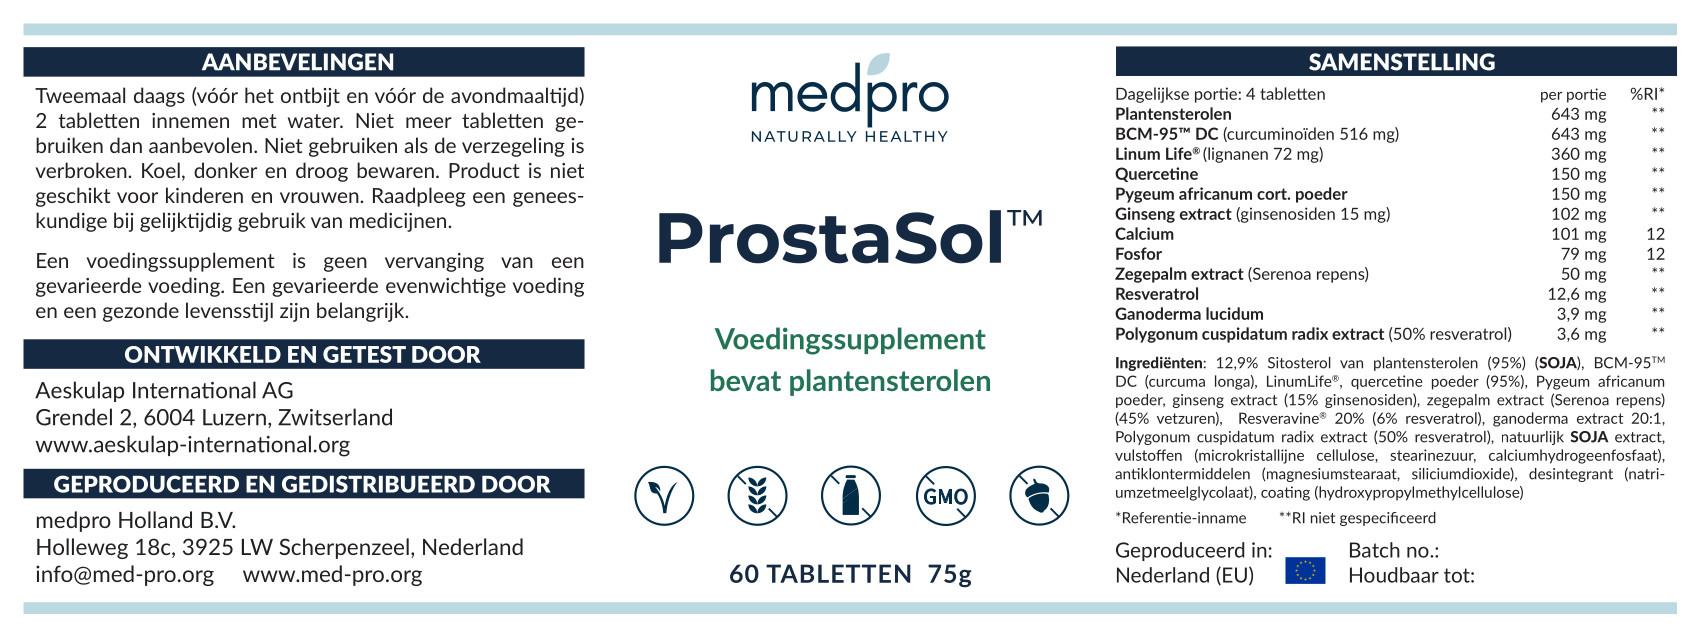 Prostasol_label_NL